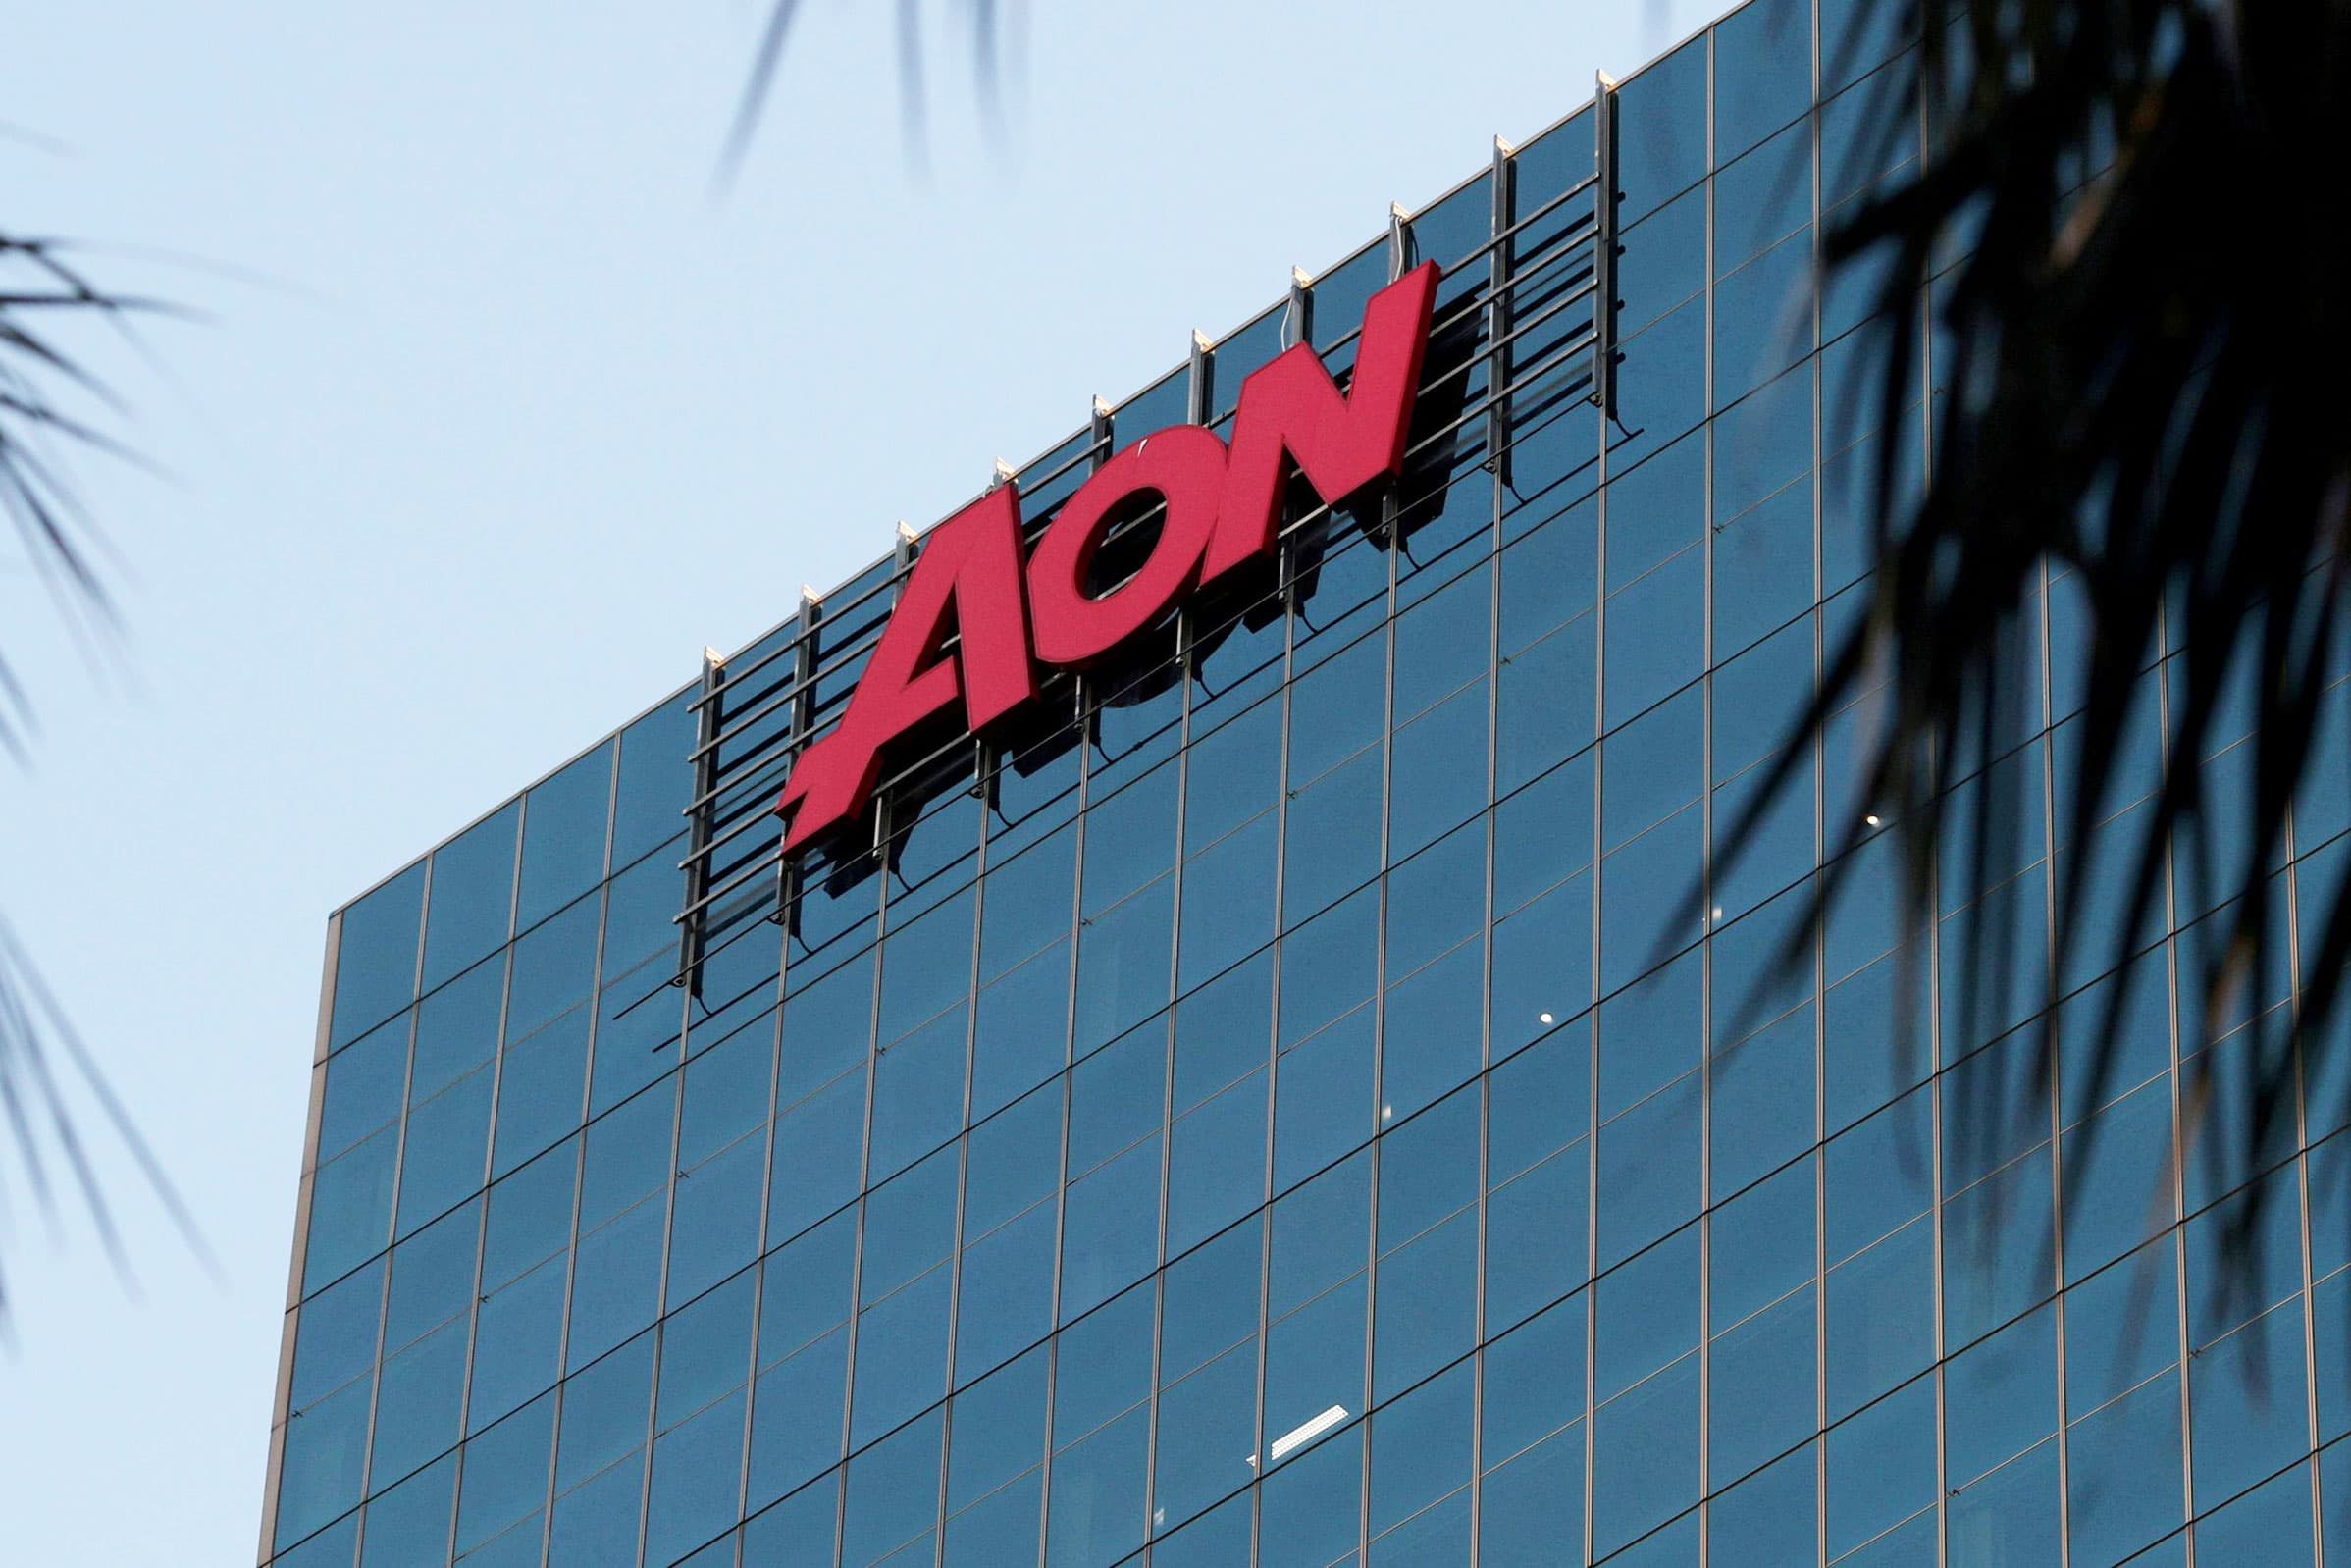 Insurance brokers Aon and Willis Towers Watson scrap their $30 billion merger